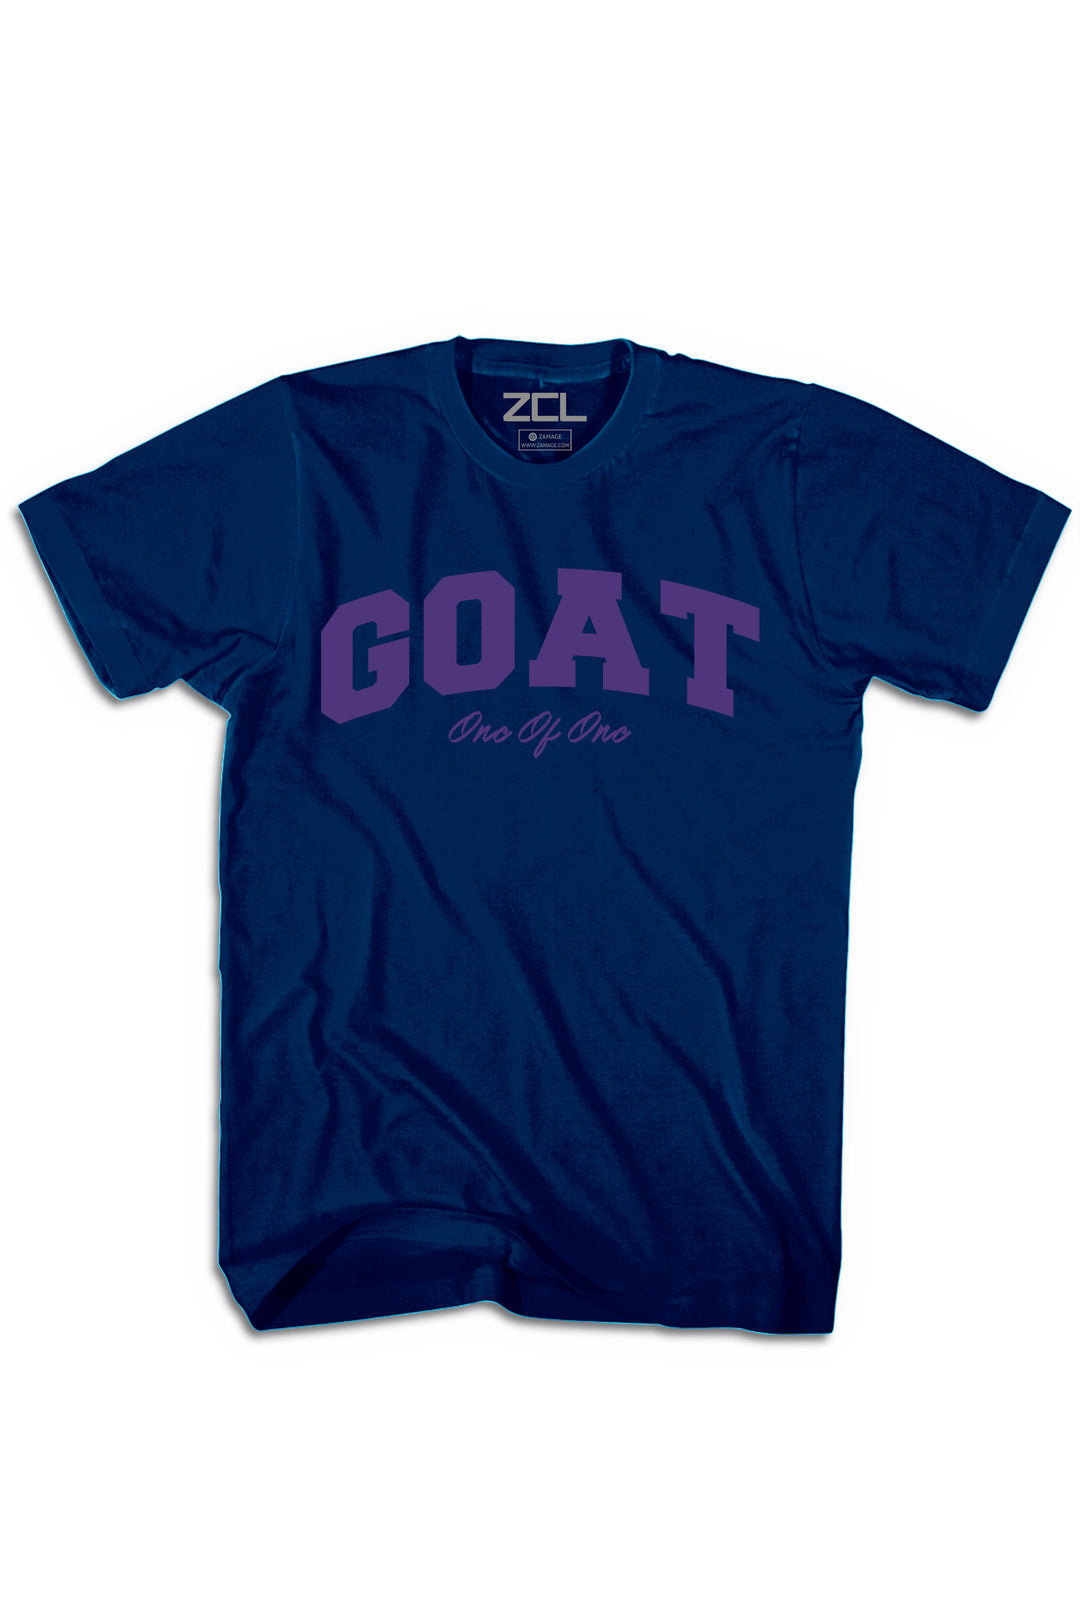 Goat Tee (Purple Logo) - Zamage